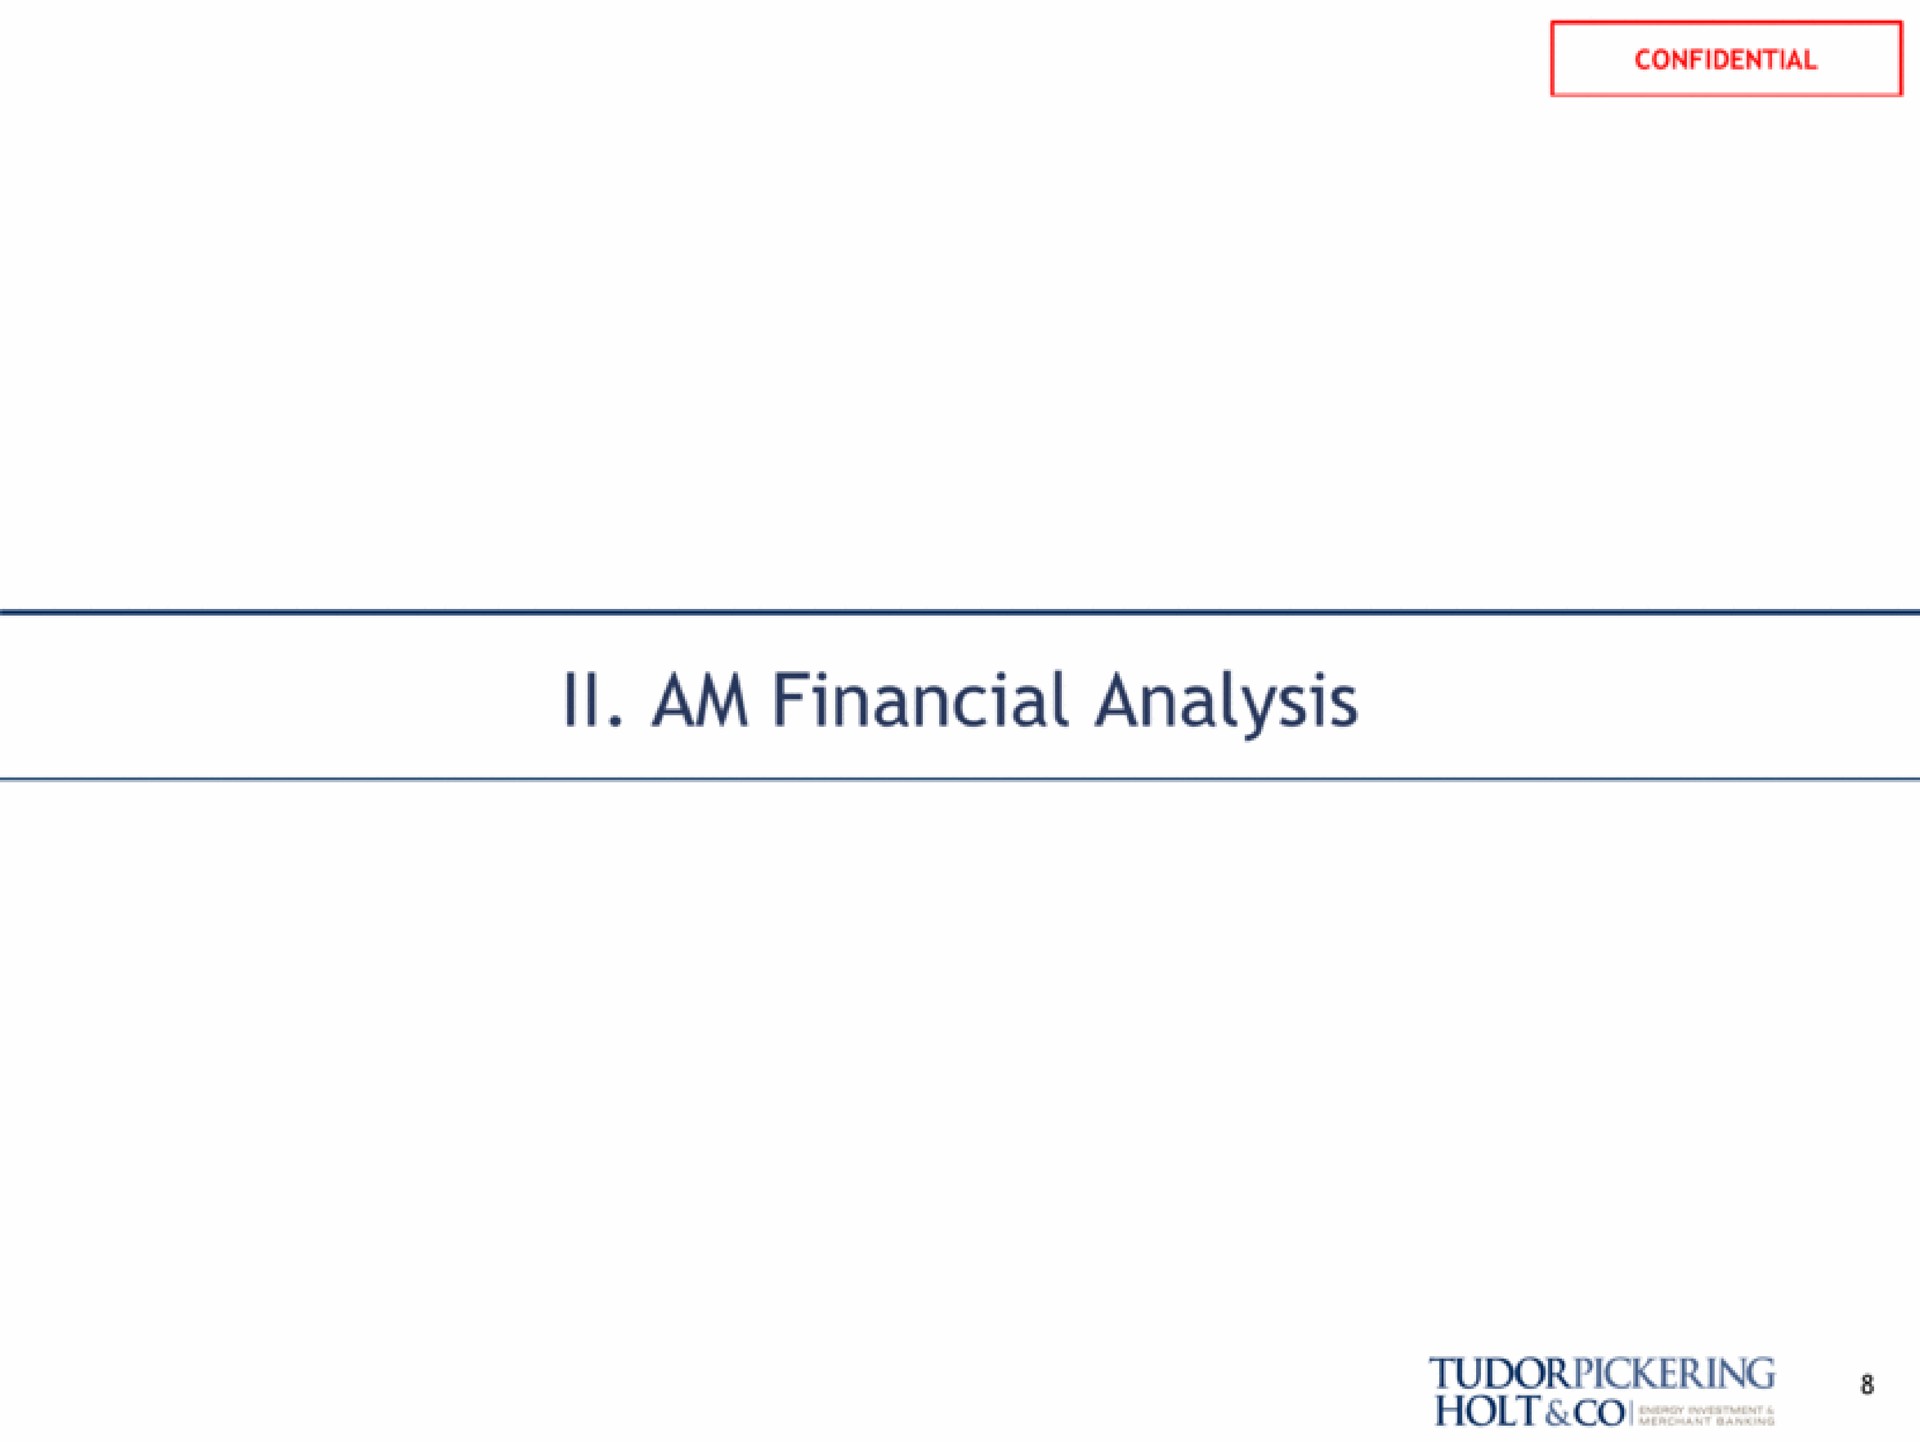 am financial analysis holt | Tudor, Pickering, Holt & Co